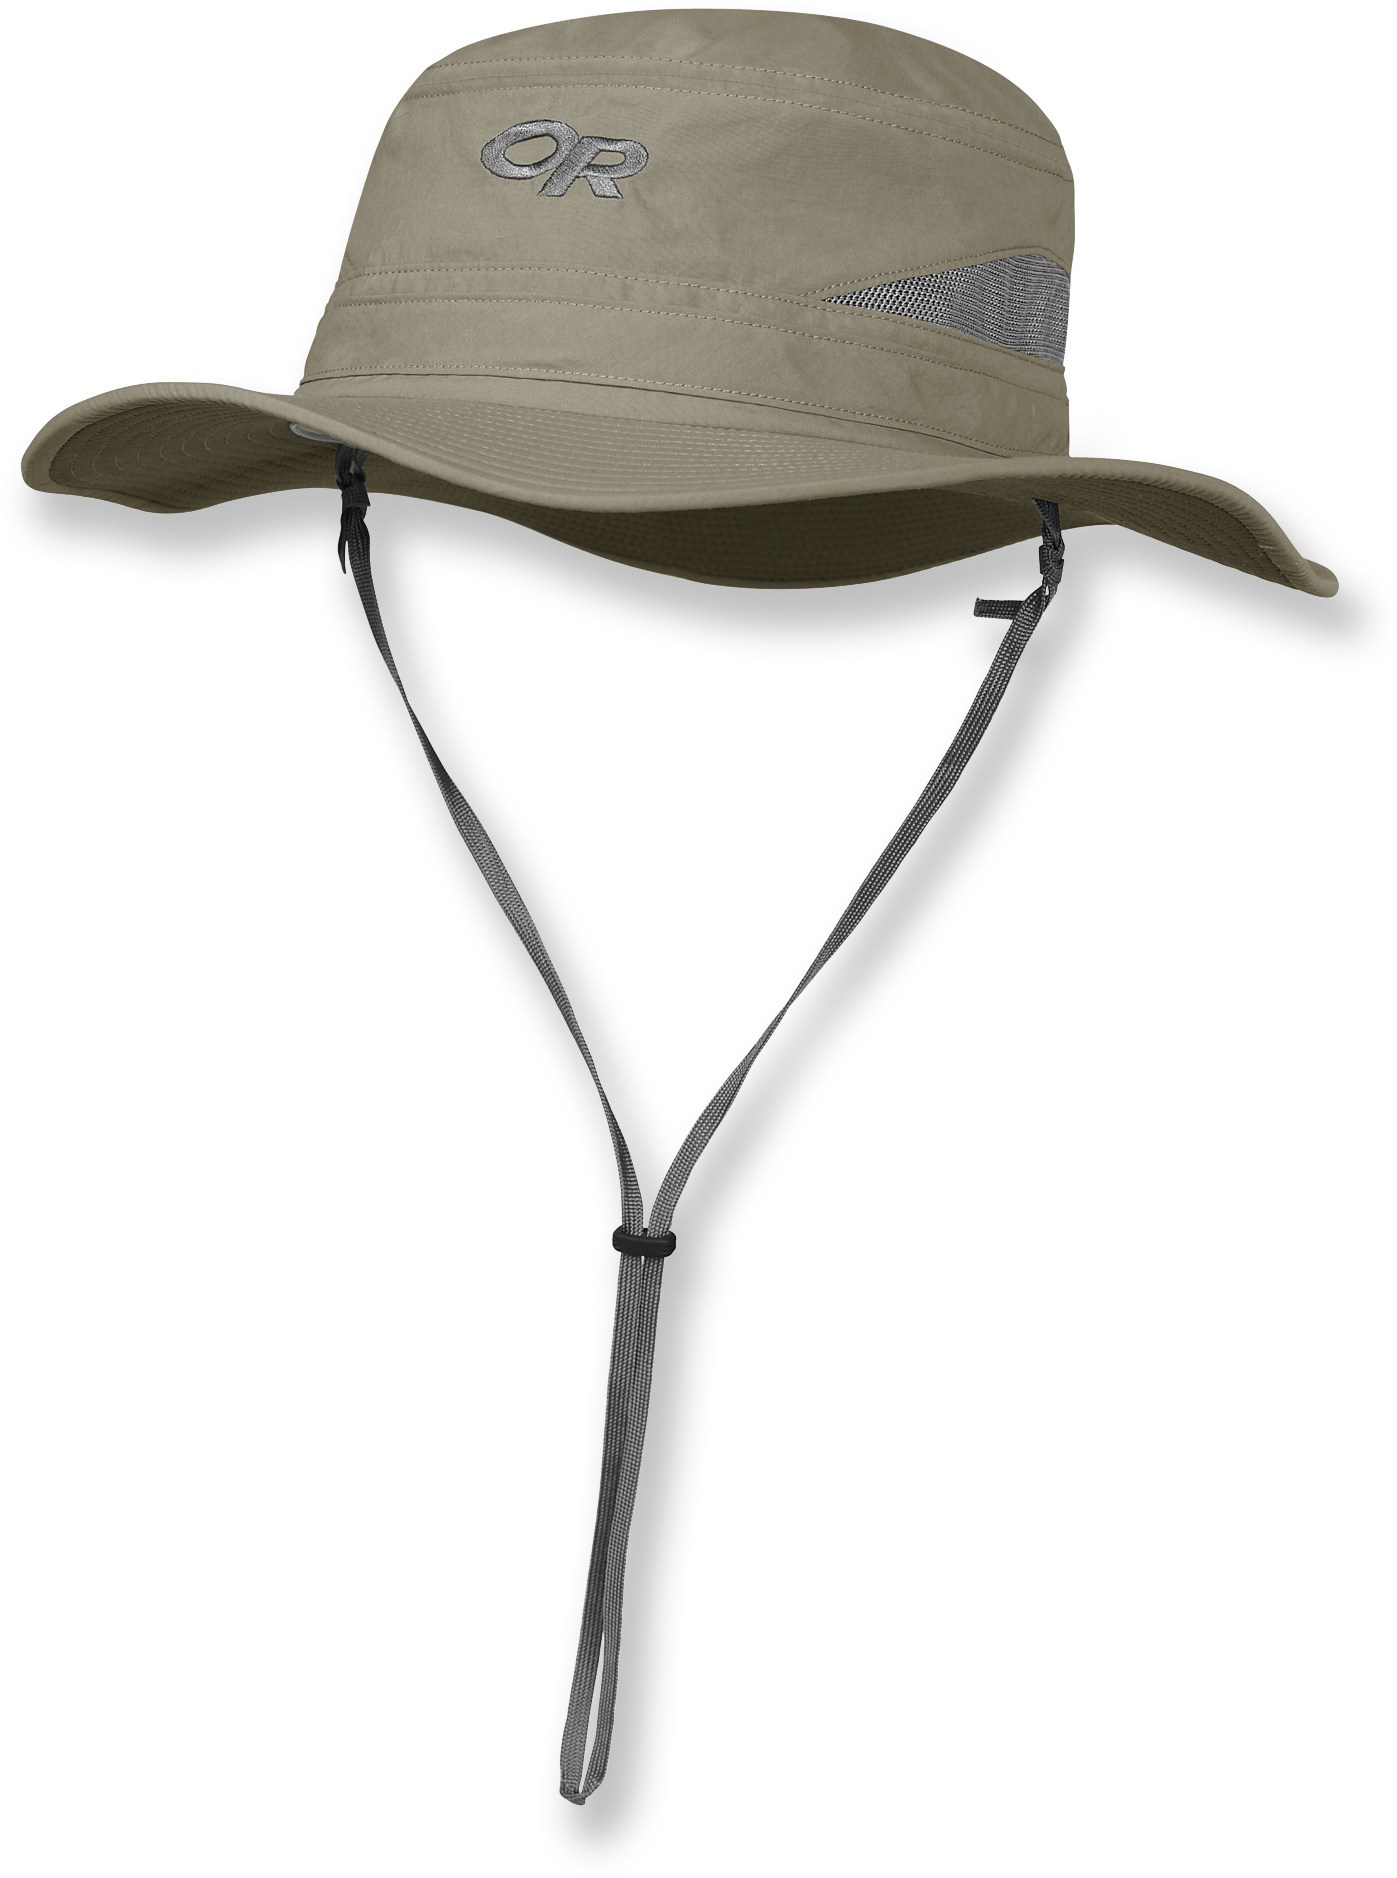 Шляпа с полями Bugout Outdoor Research, хаки